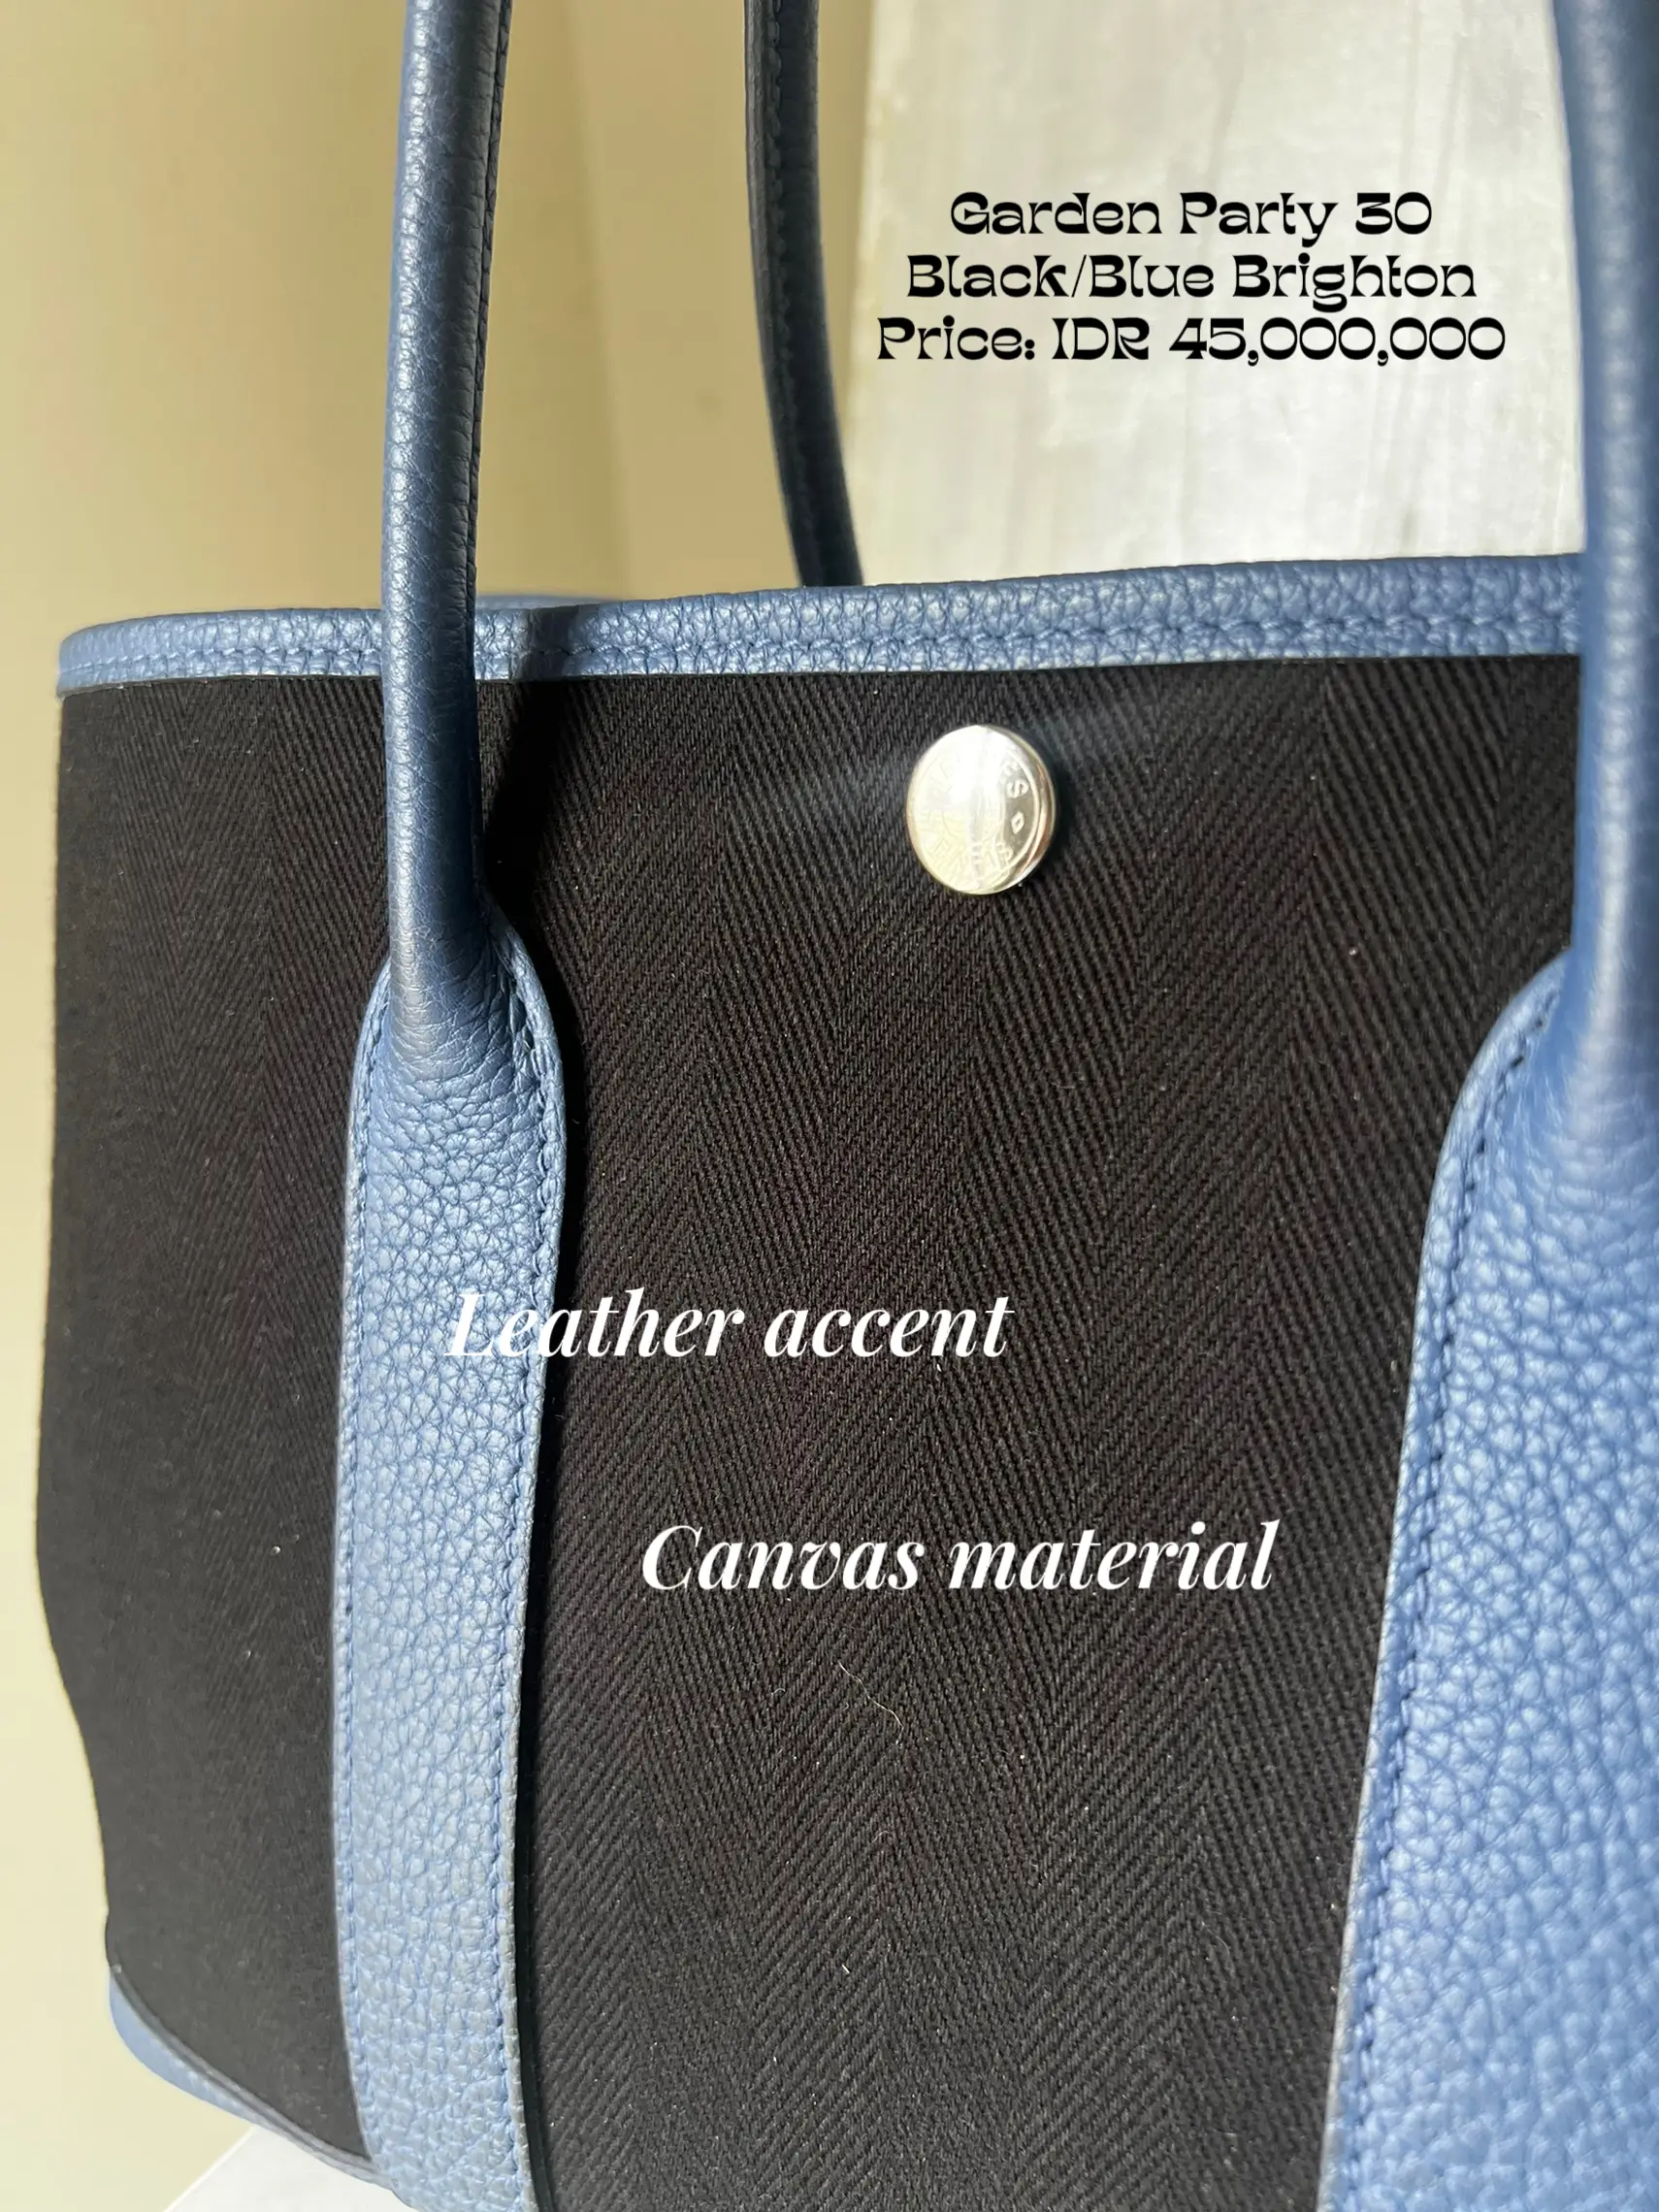 Hermès Garden Party 30 Negonda Leather Canvas Tote Bag